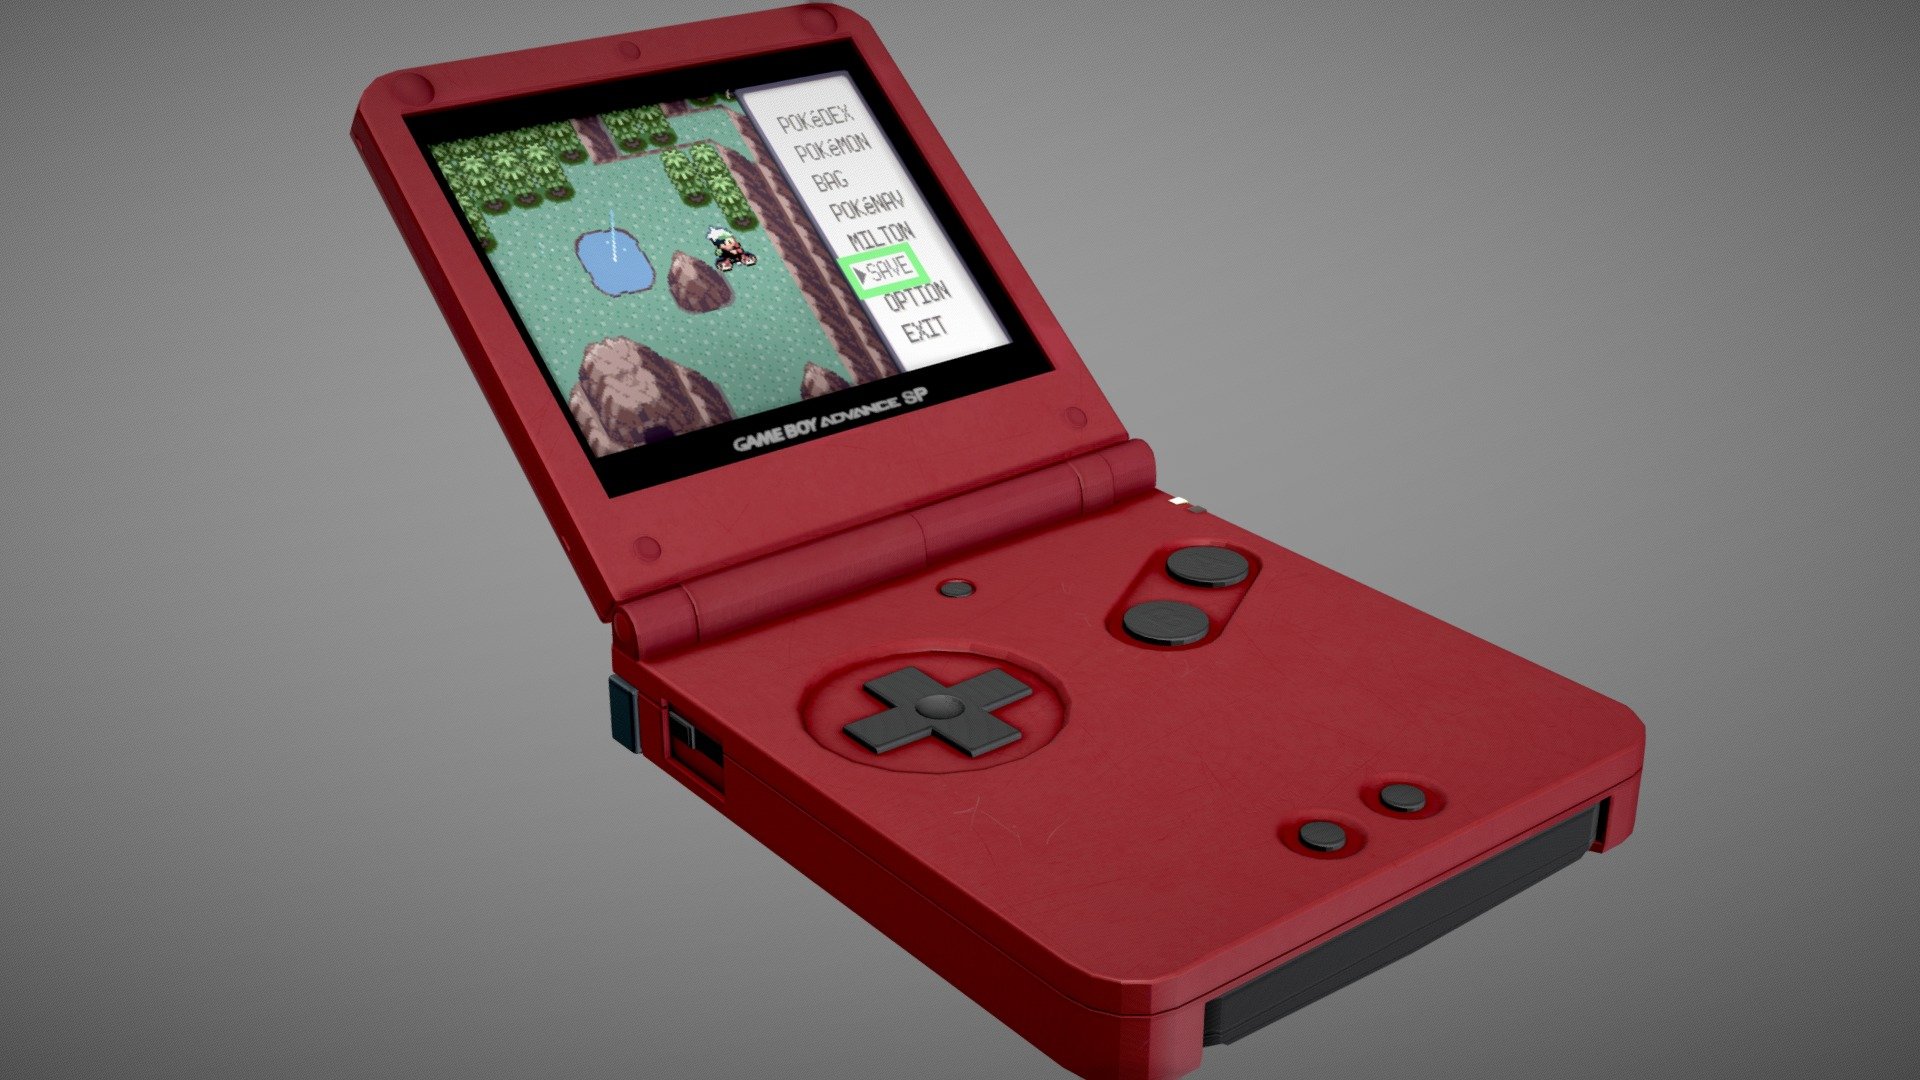 Gameboy Advance SP free 3D model